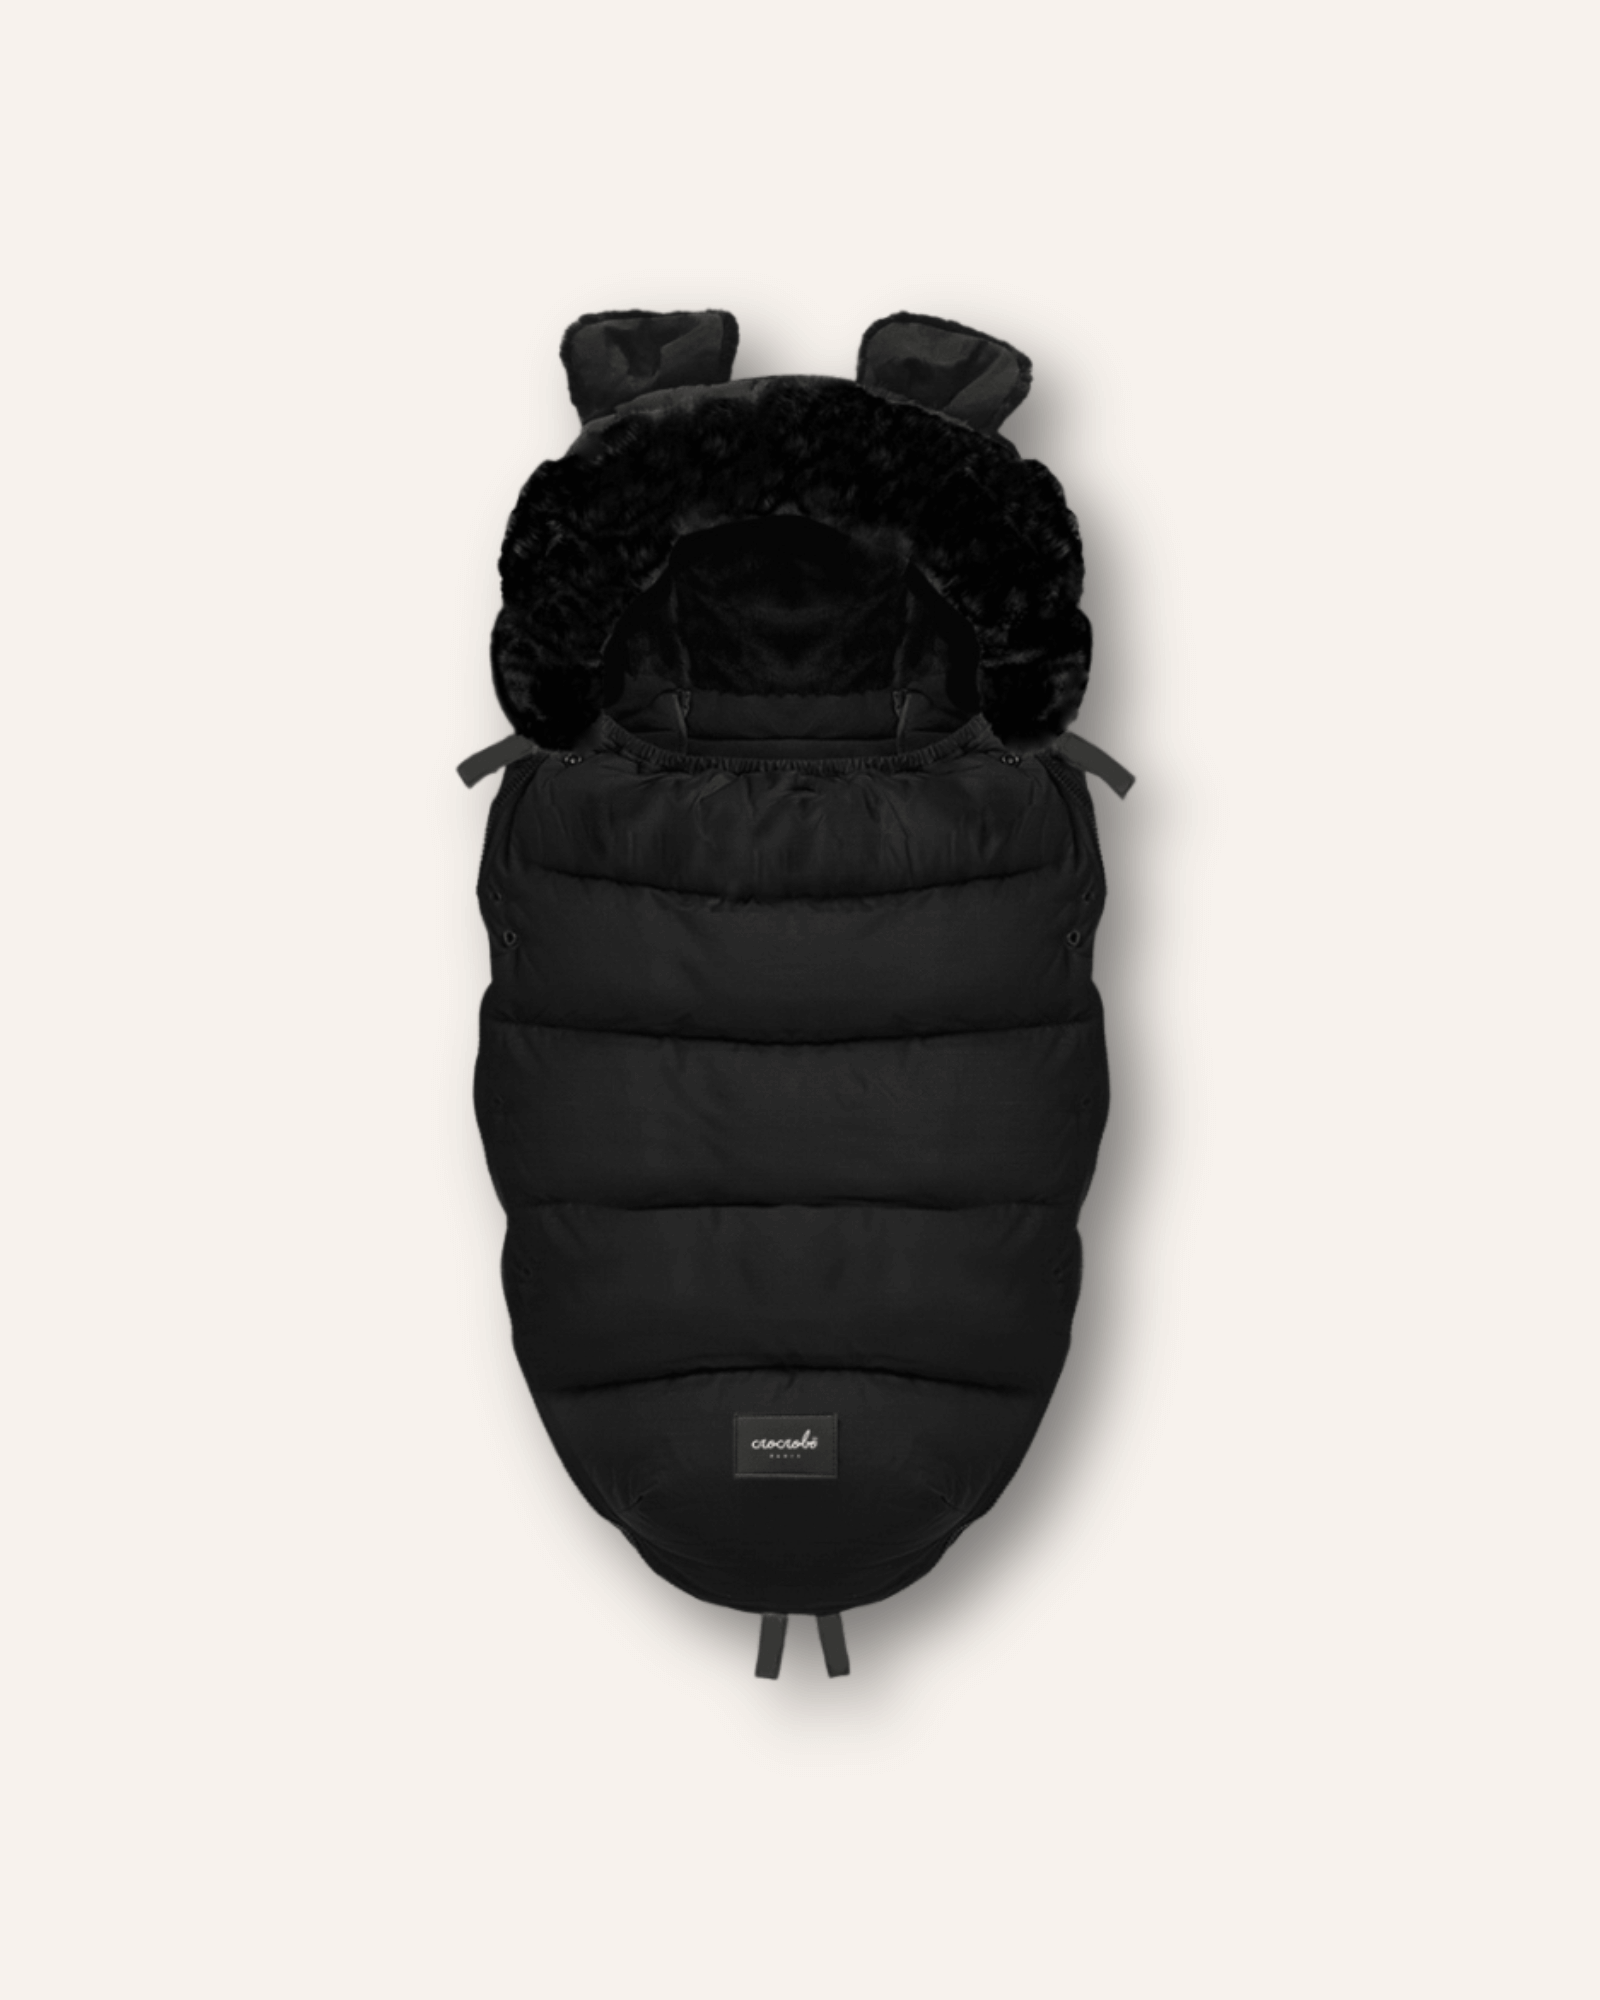 INAYA UNIVERSAL Blanket - classic stroller "Black Edition"